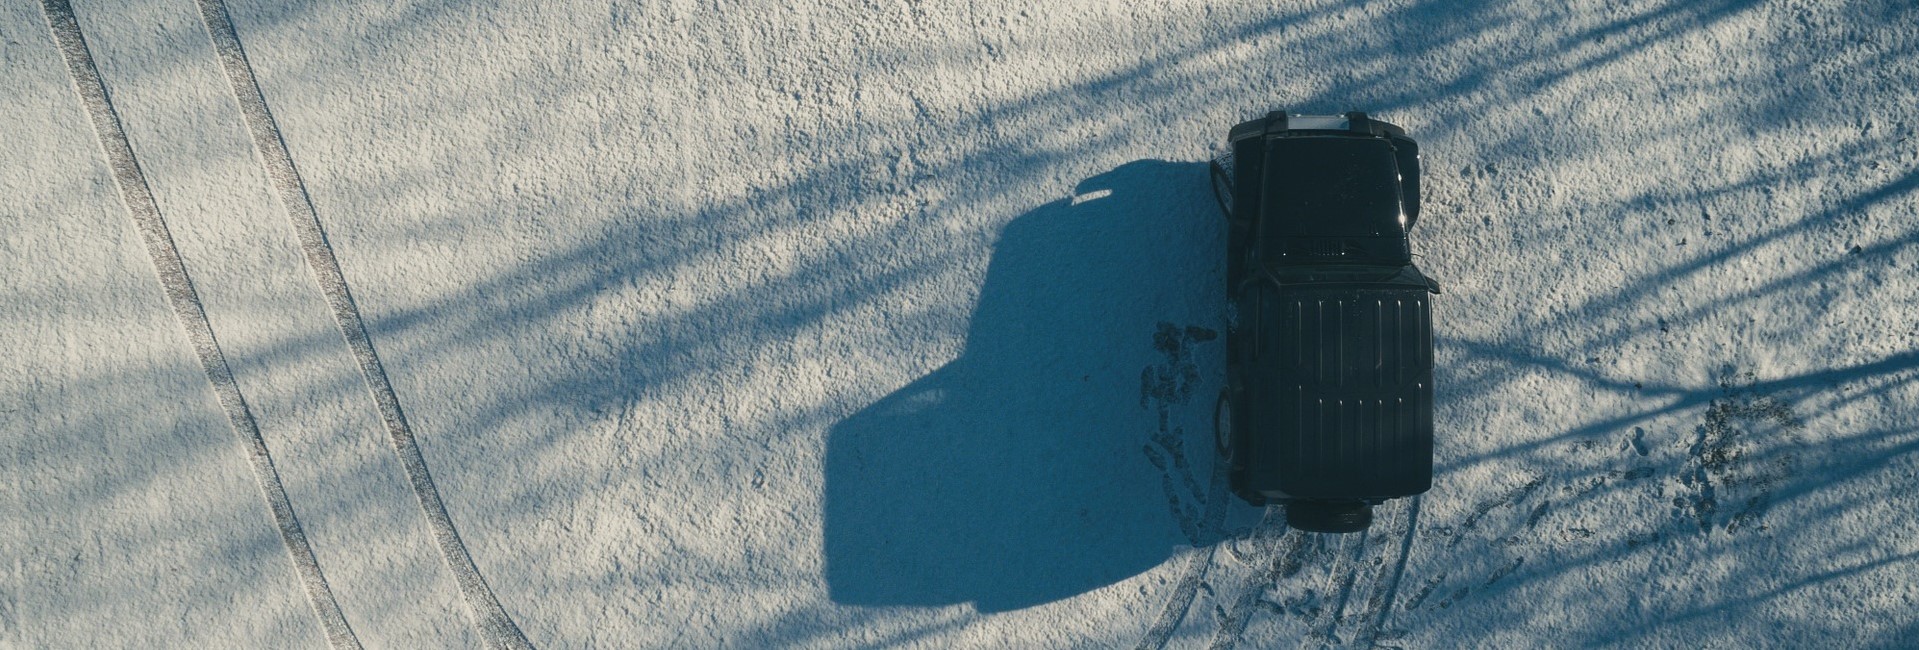 SUV on a Snow - GWCars.org